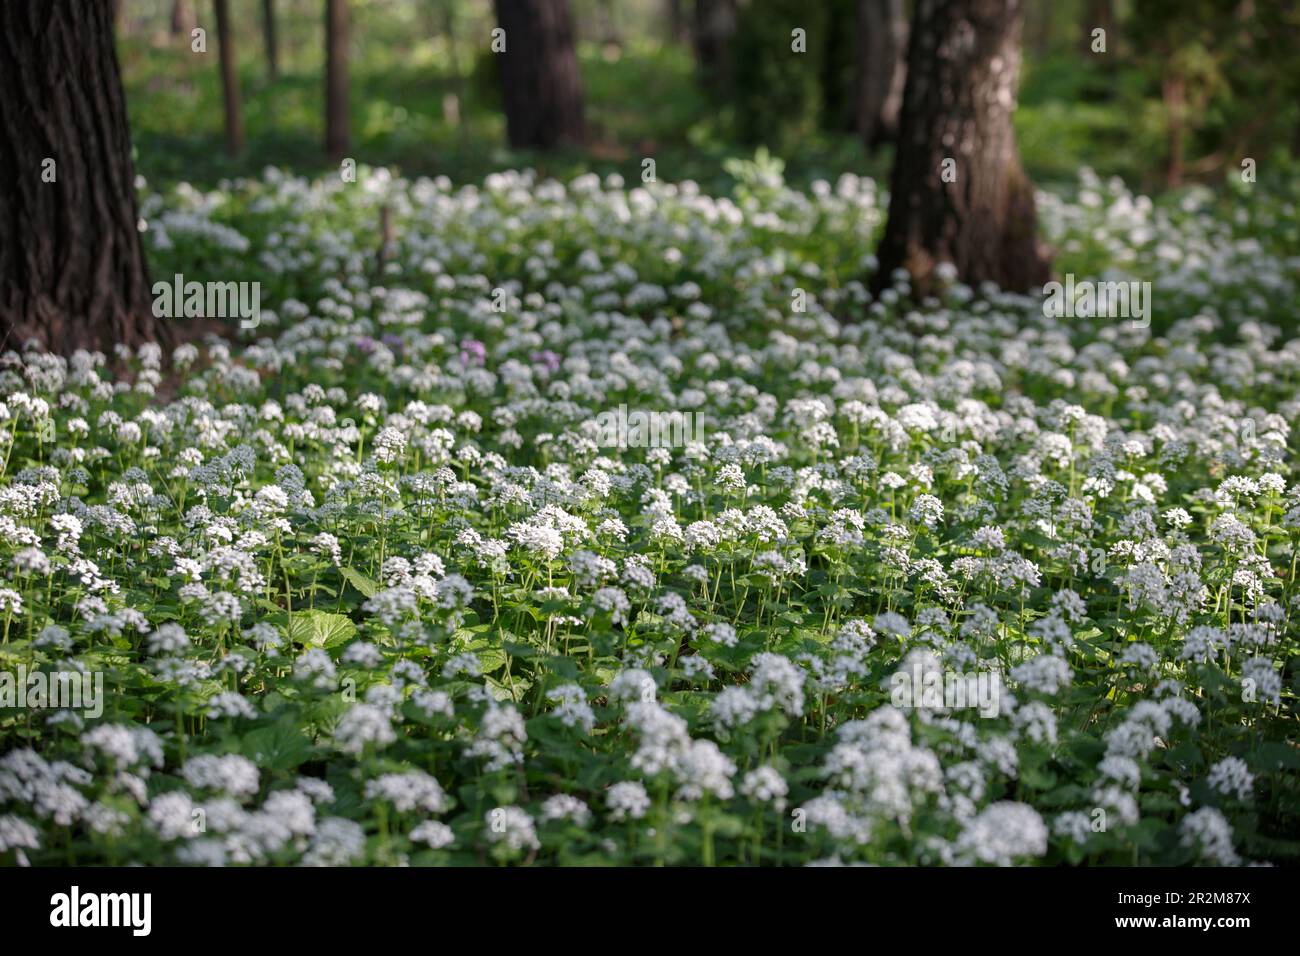 Arabis caucasica. Arabis alpina, mountain rockcress or alpine rock cress. White arabis caucasica flowers growing in the forest. Floral background. Gar Stock Photo